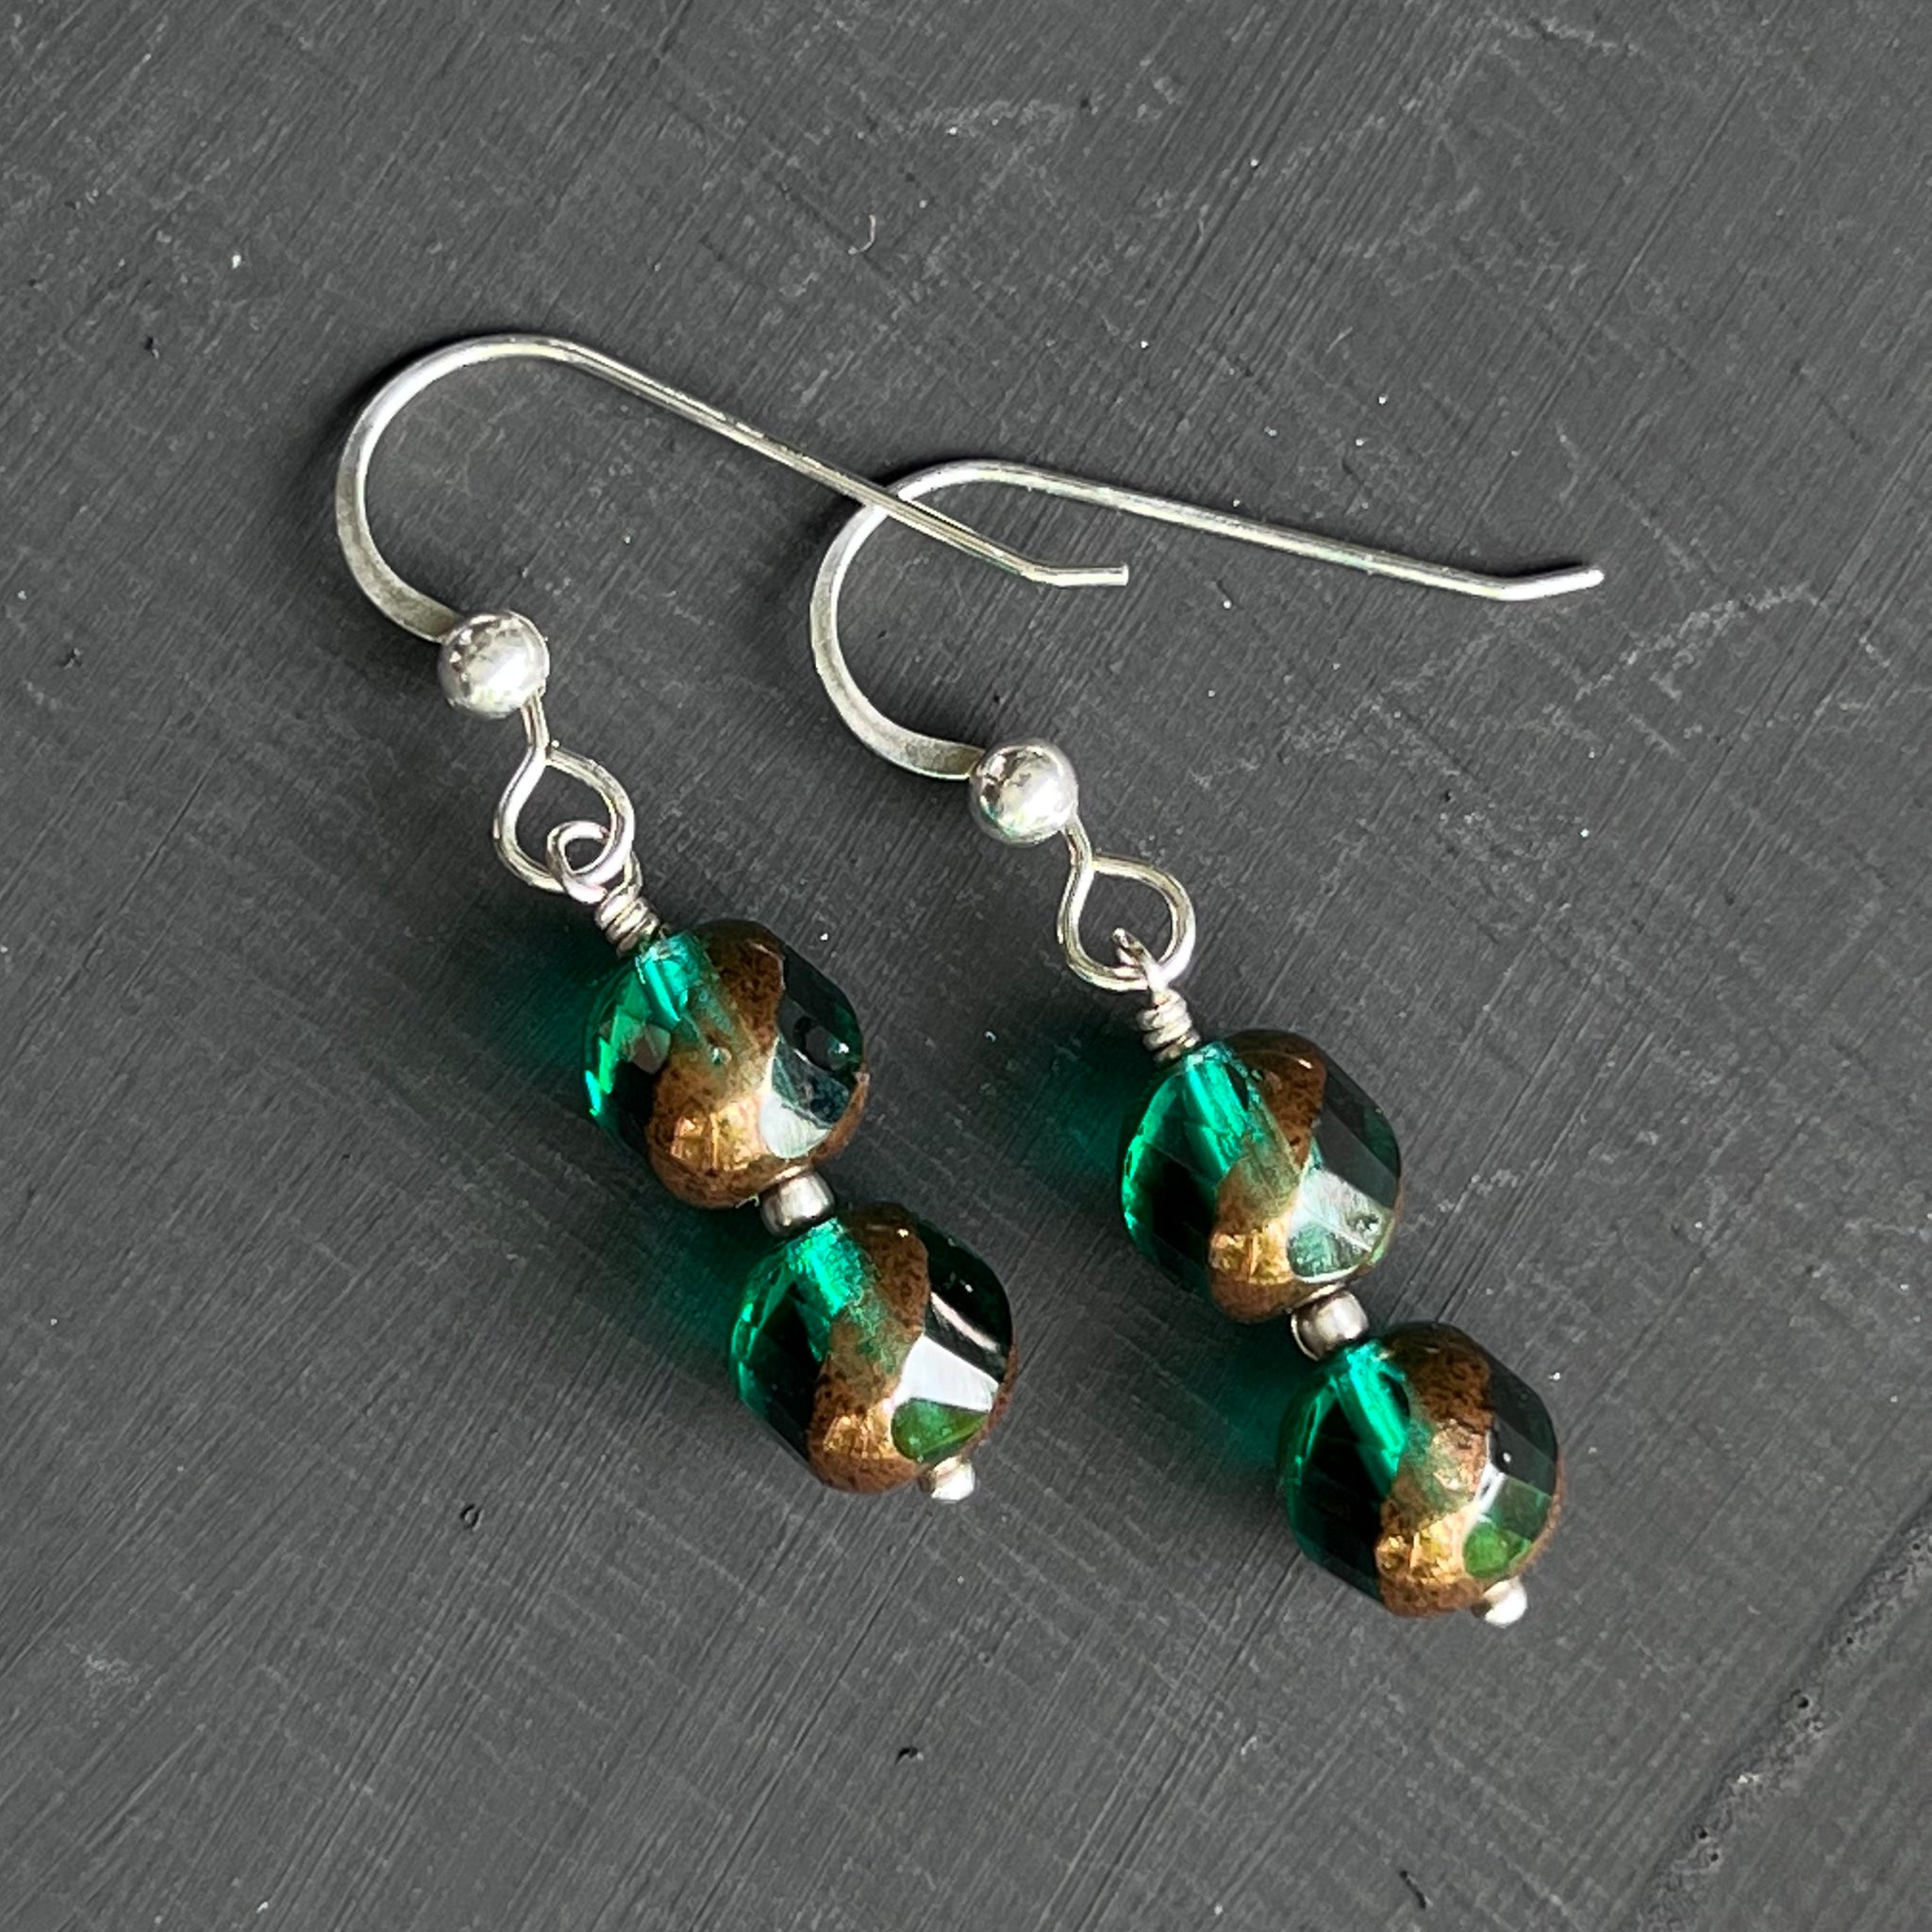 Green with gold swirl earrings